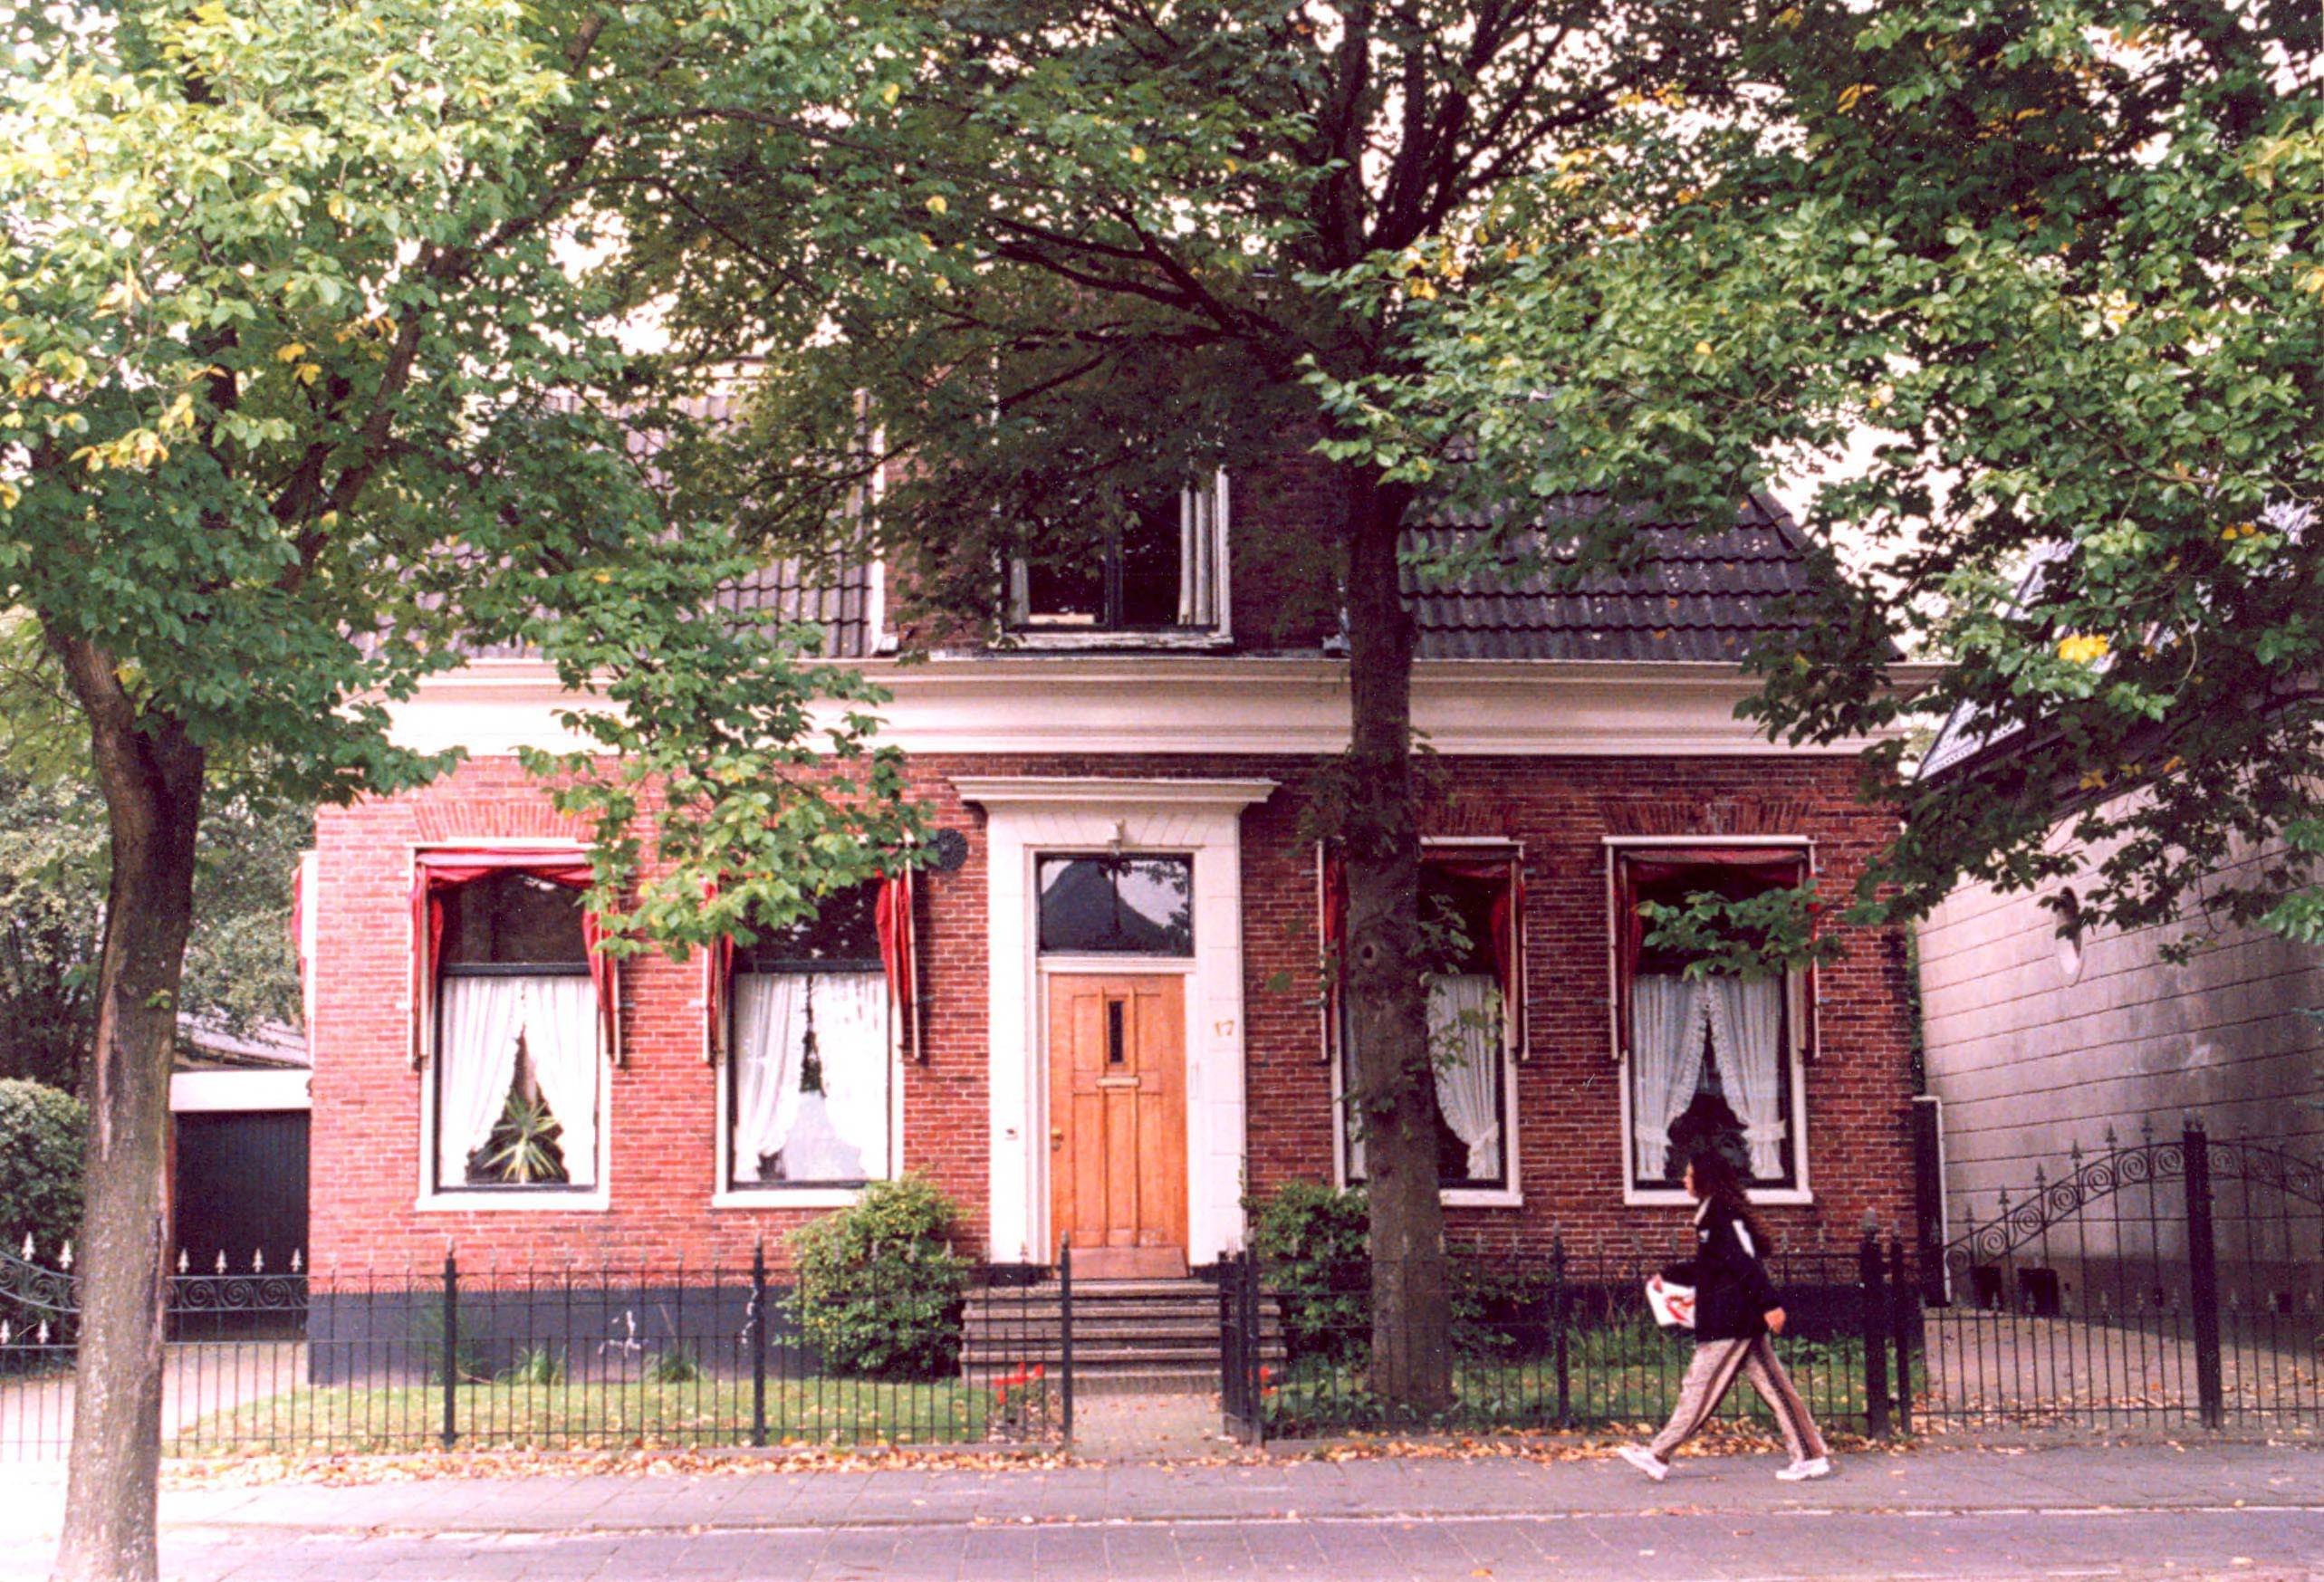 het huis waarin burgemeester Salet woonde aan de Noorderstraat 17 te Sappemeer.